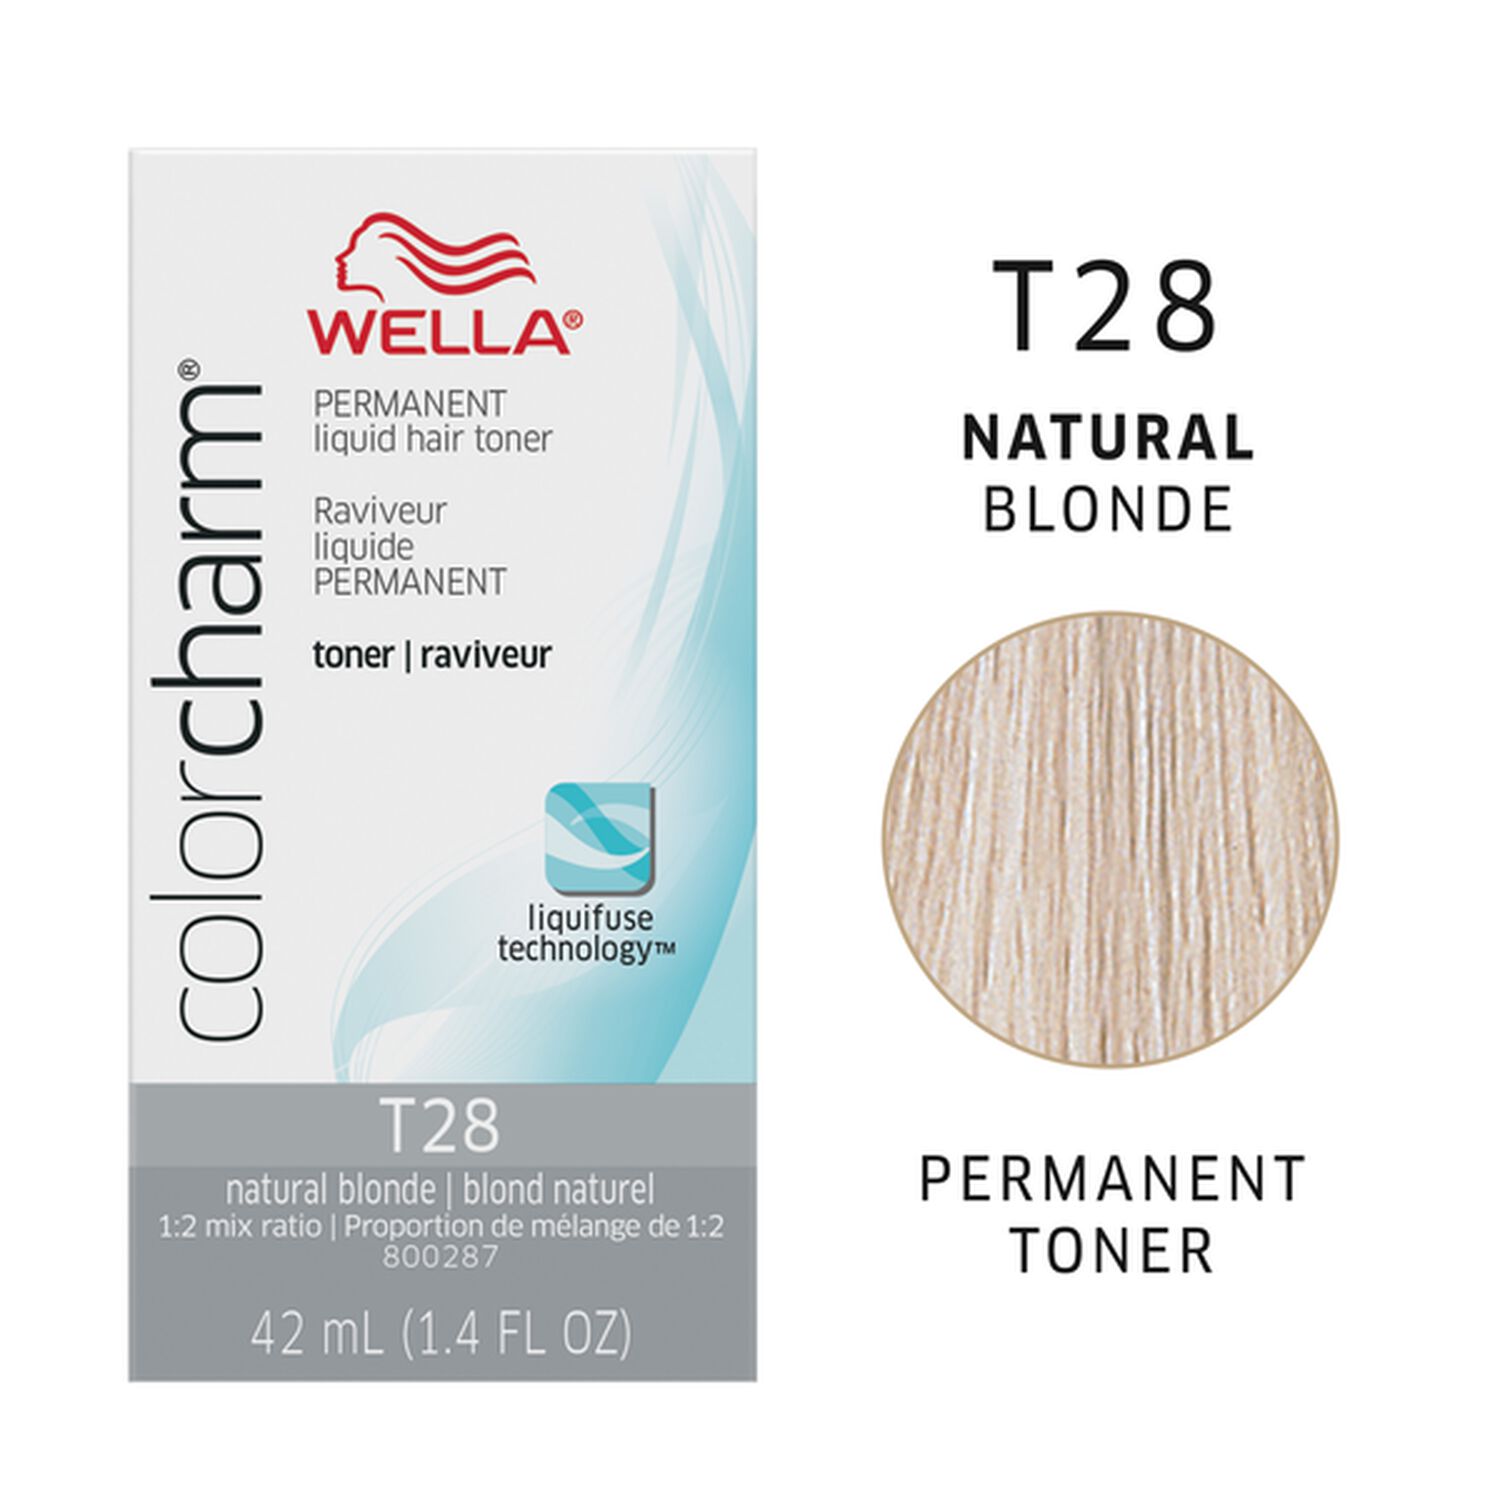 Wella Color Charm T28 Natural Blonde hair toner dye